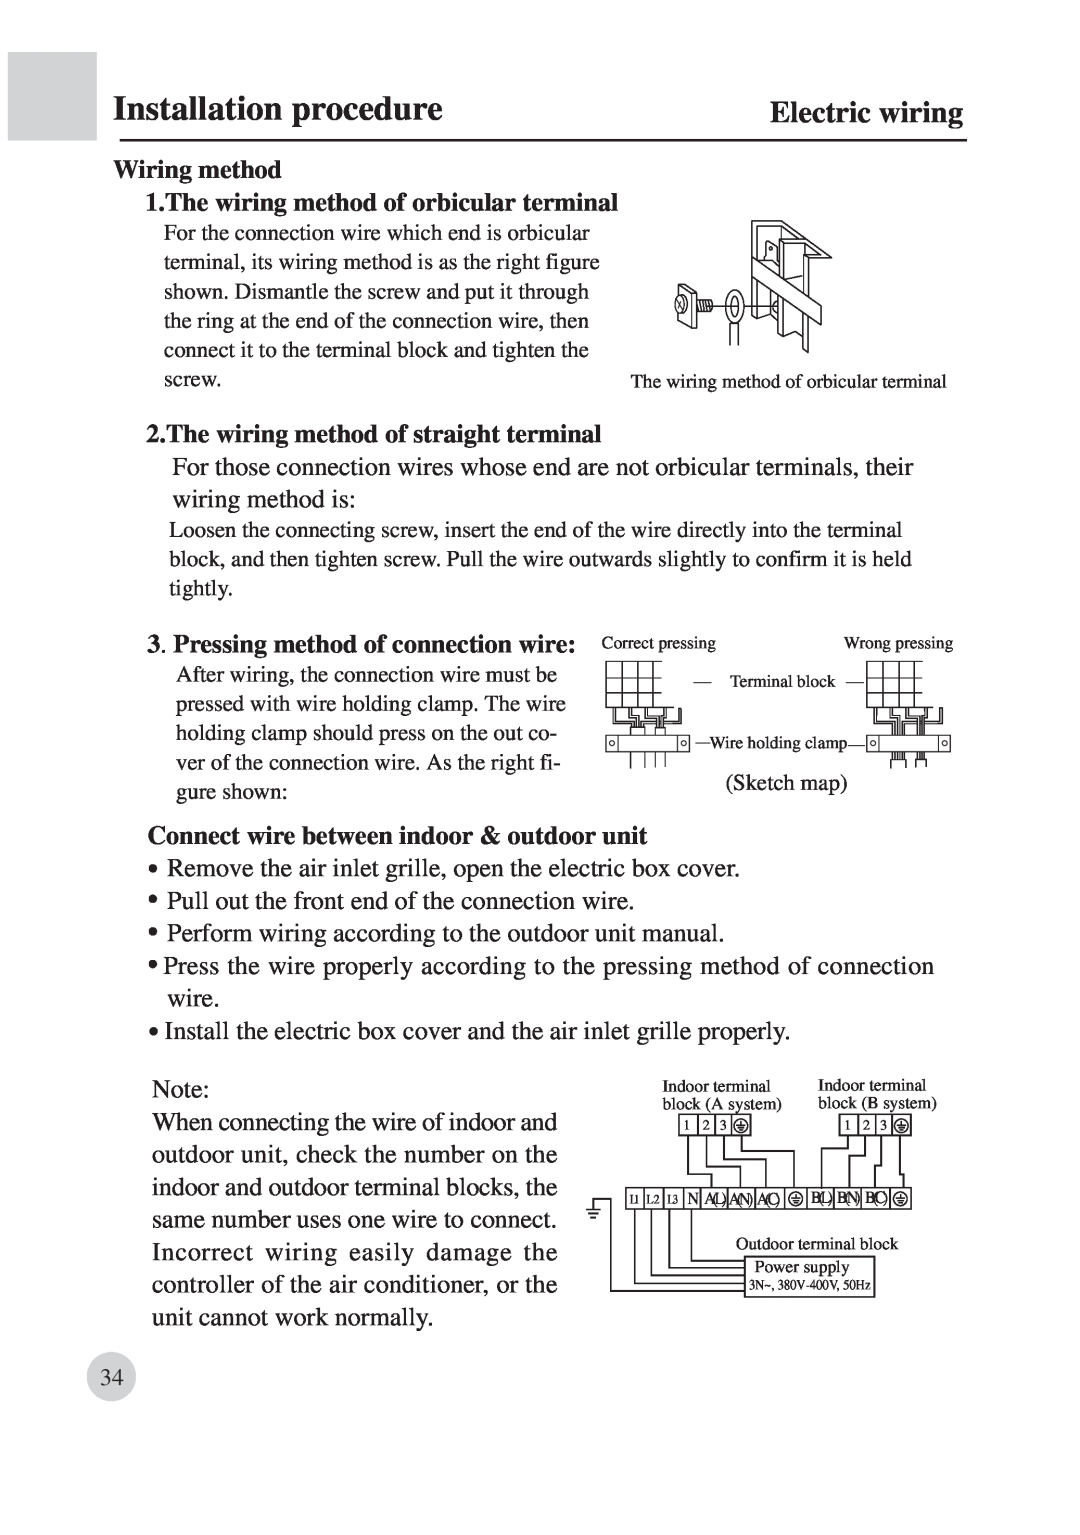 Haier AB422BCBAA manual Electric wiring, Installation procedure, Wiring method, The wiring method of orbicular terminal 